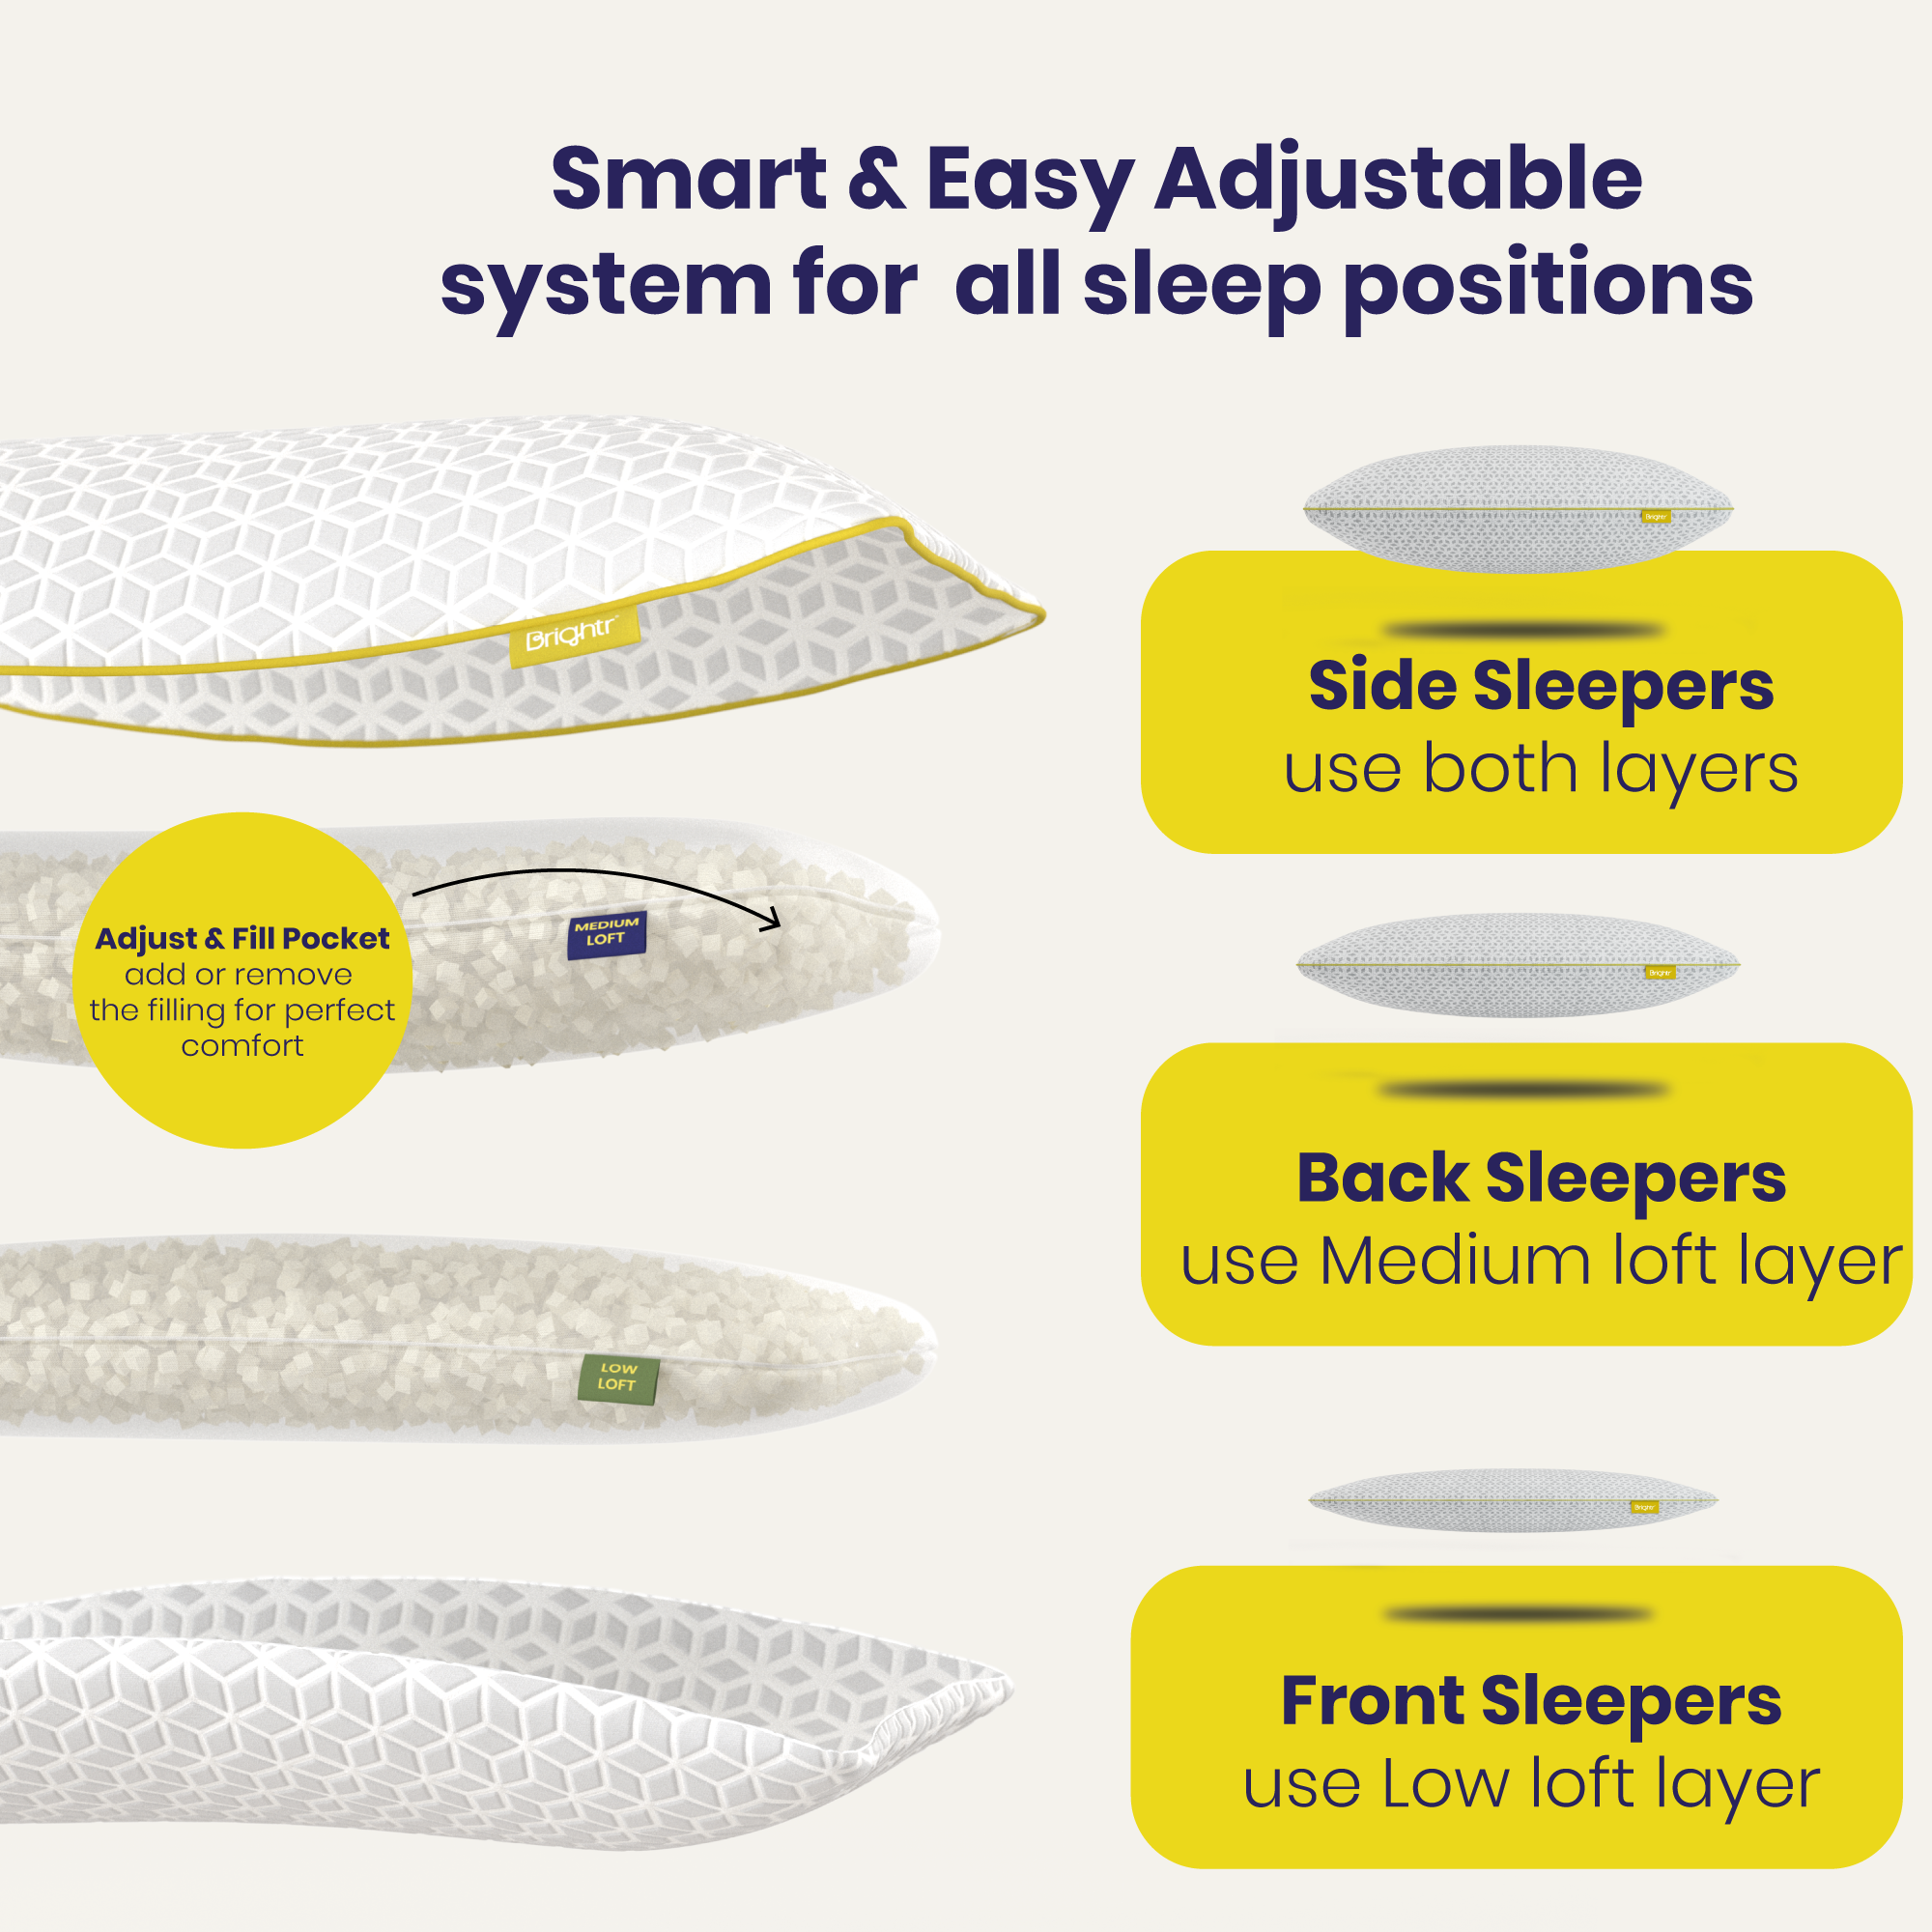 Brightr® Luna Adjustable Memory Foam Pillow - Customizable Support